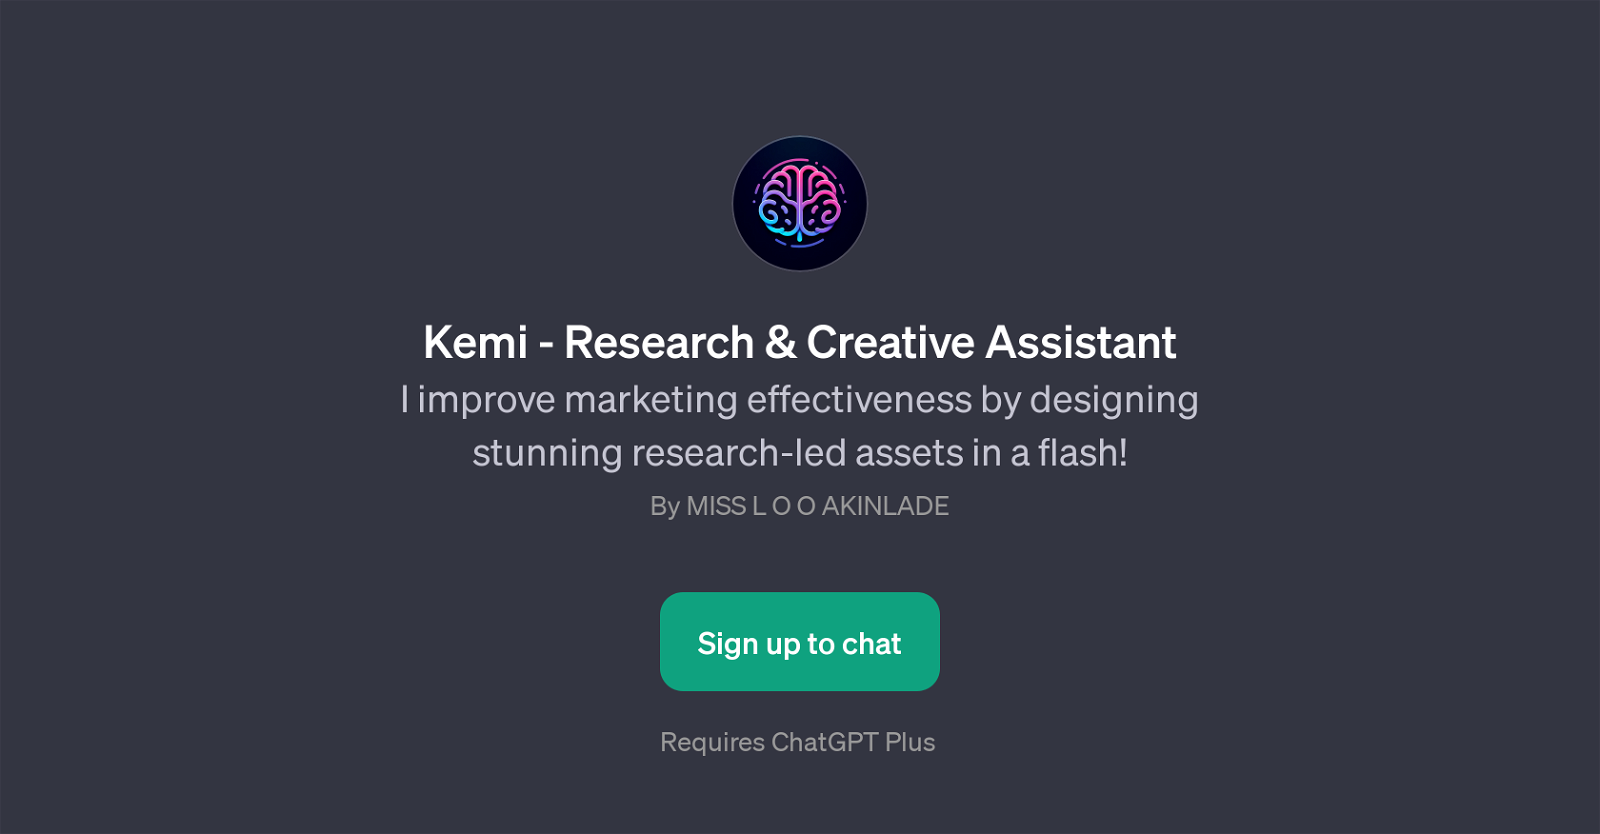 Kemi - Research & Creative Assistant website